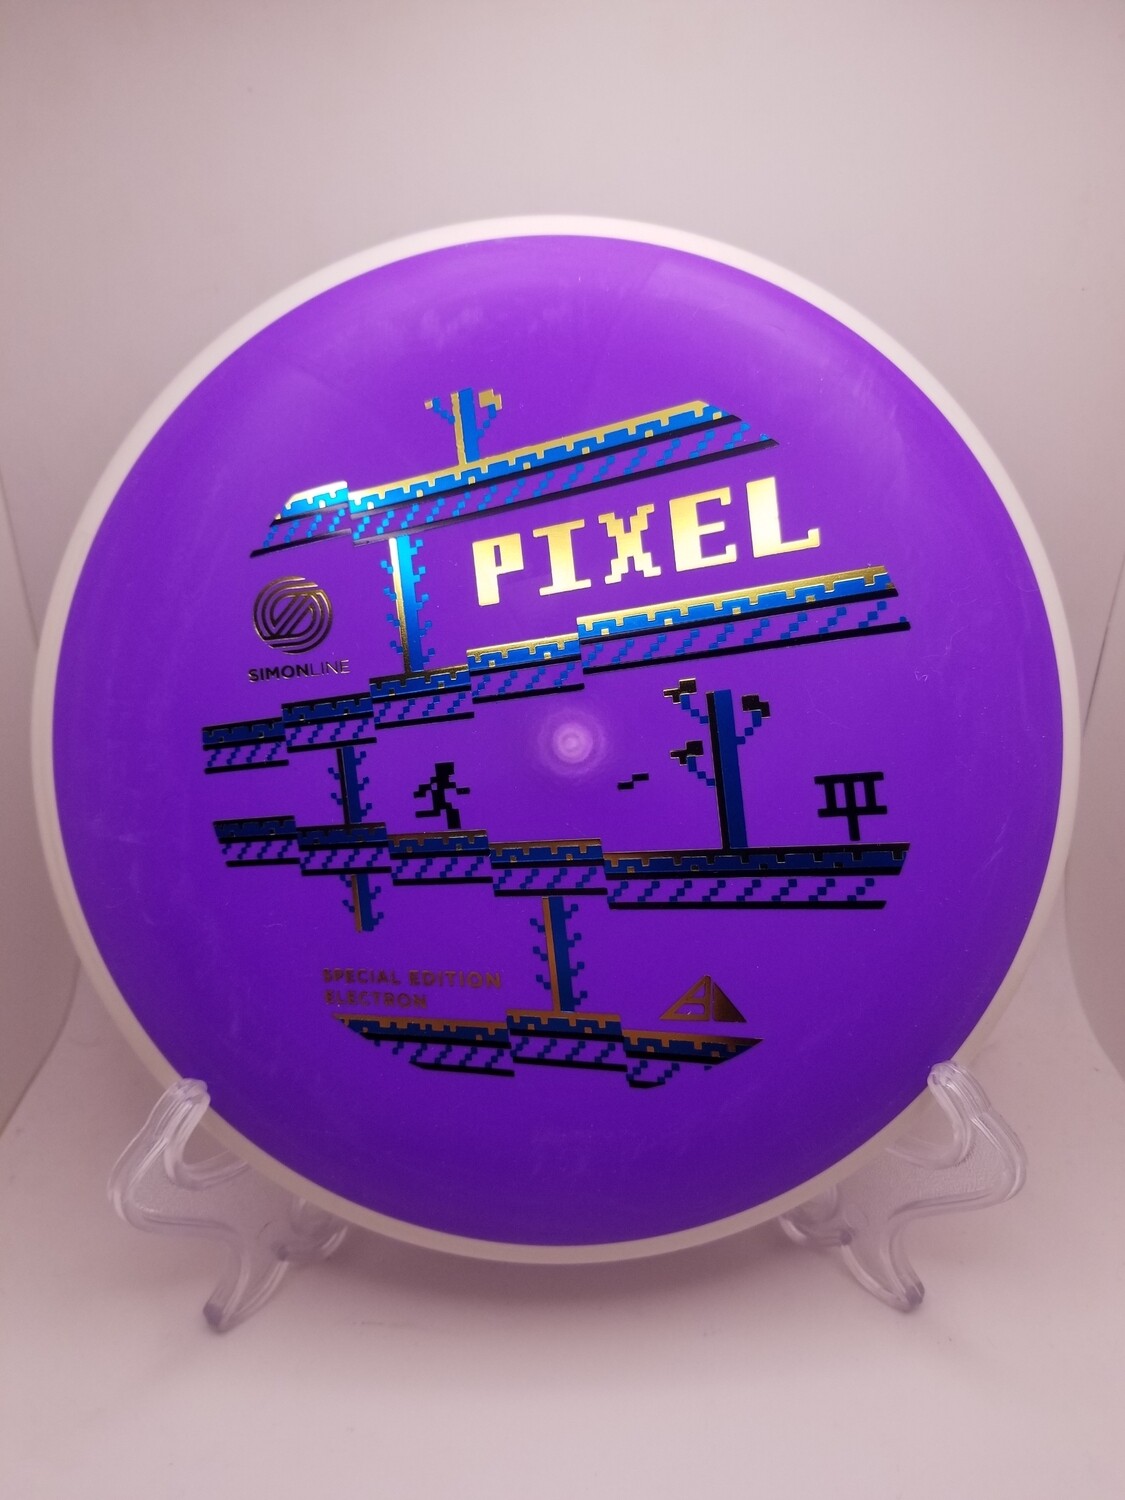 Axiom Discs - Simon Line - Electron Pixel - Special Edition Purple with White Rim 174g